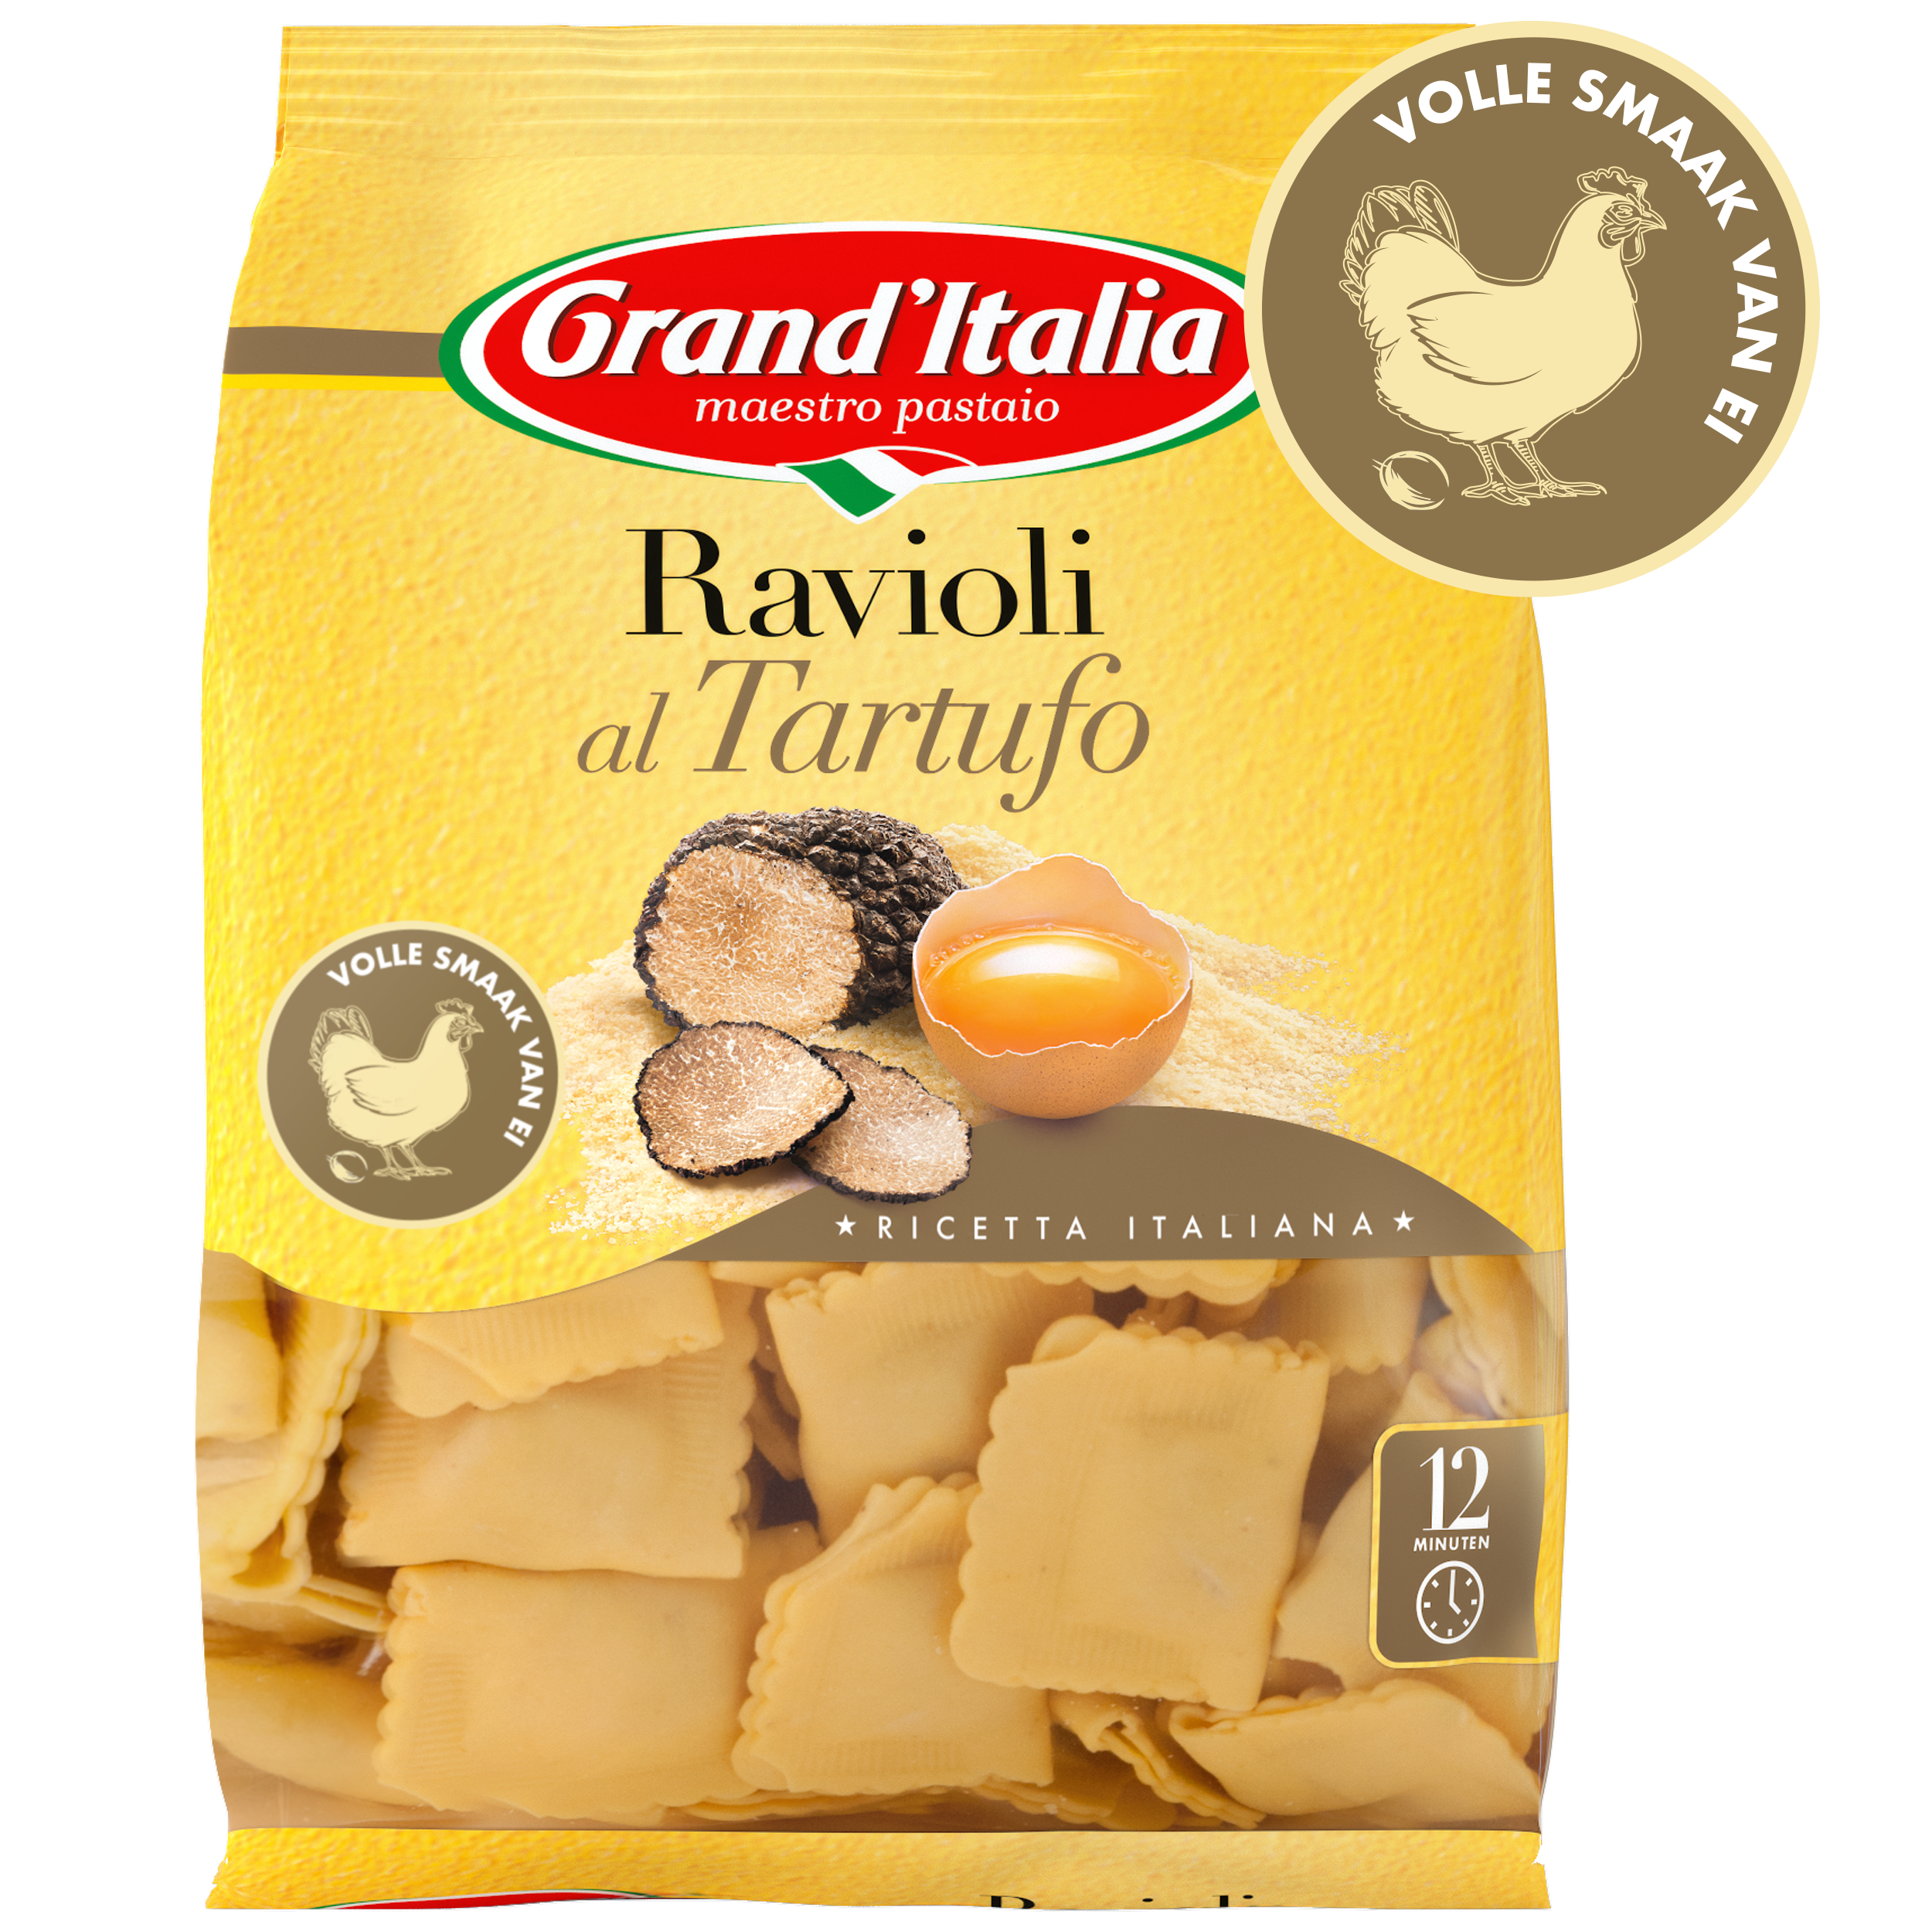 Pasta Ravioli al Tartufo 220g claim Grand'Italia